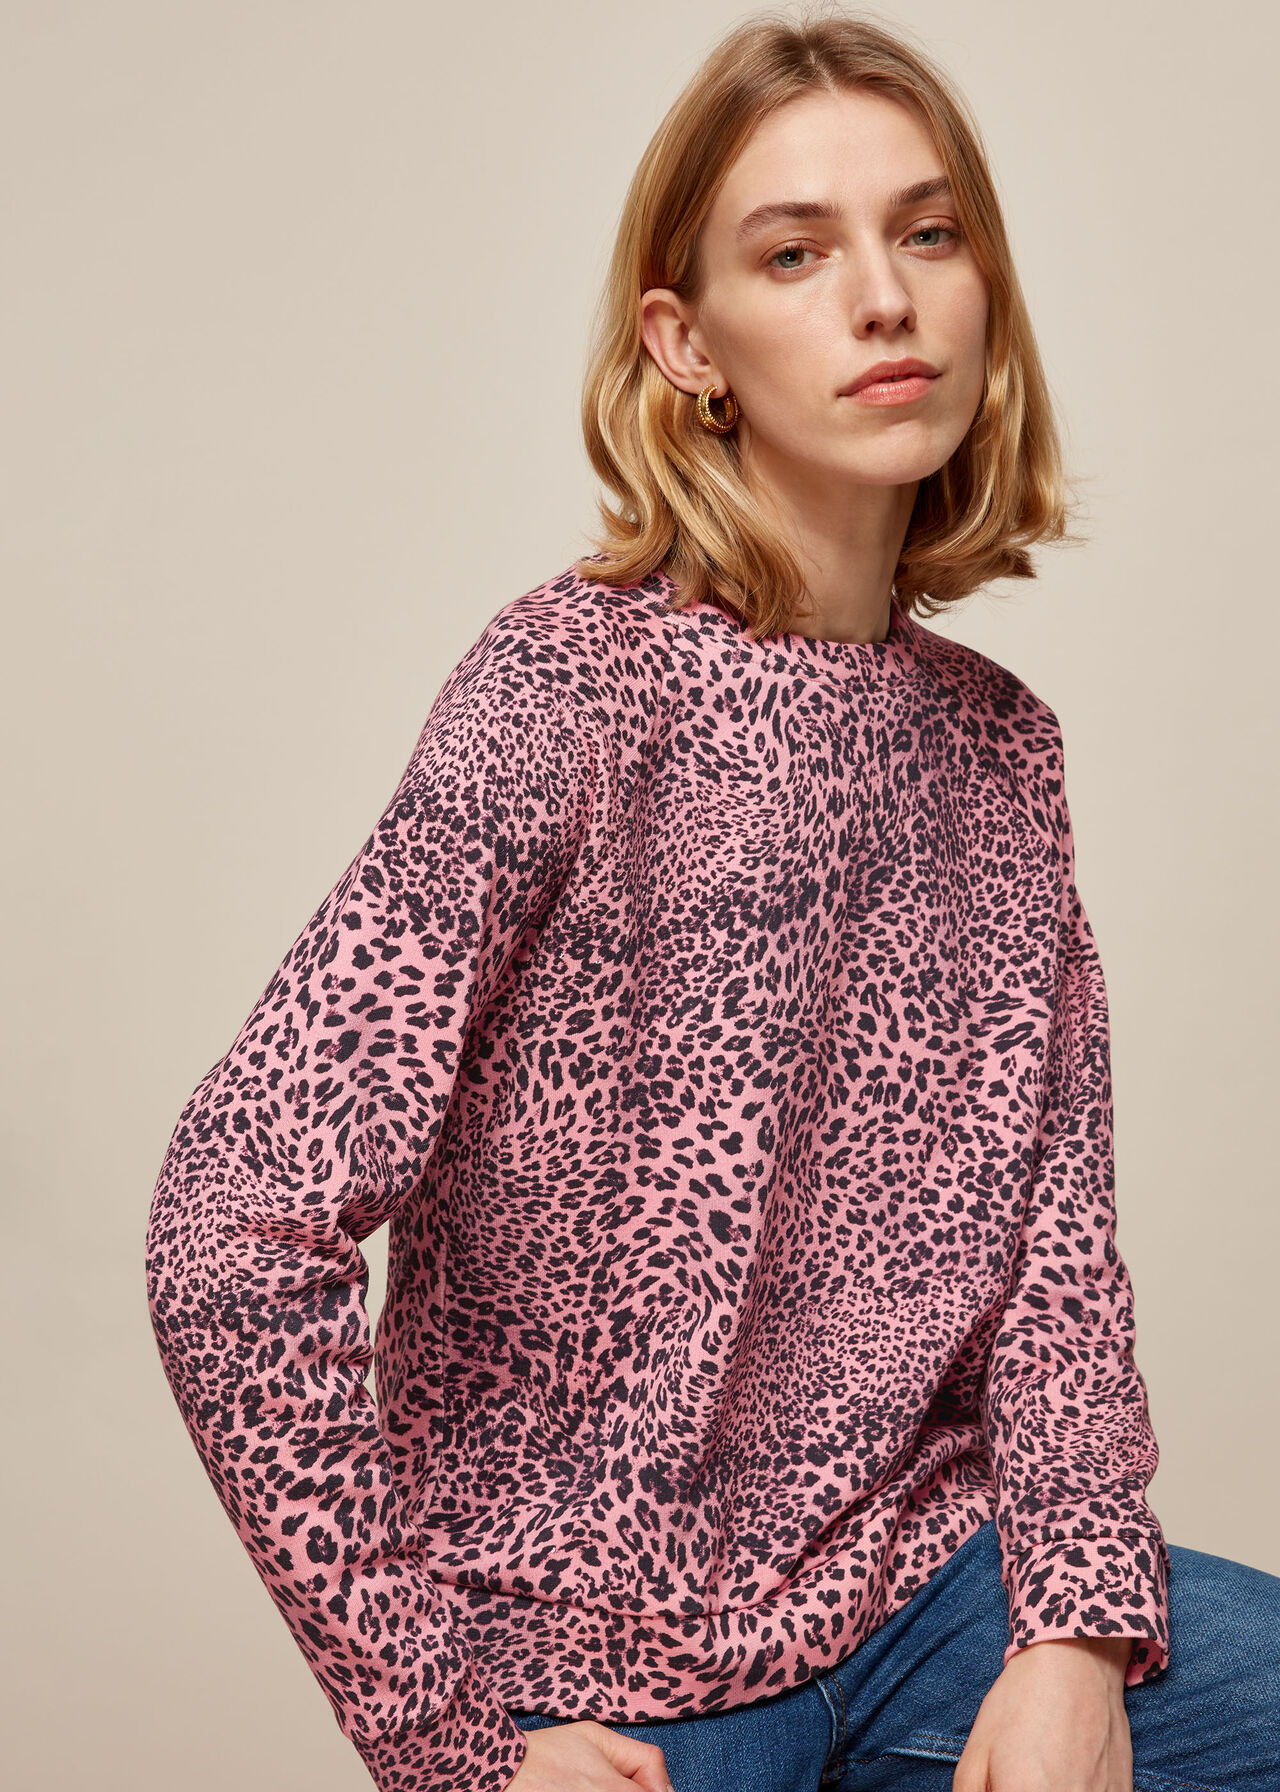 Wild Cat Printed Sweatshirt Pink/Multi